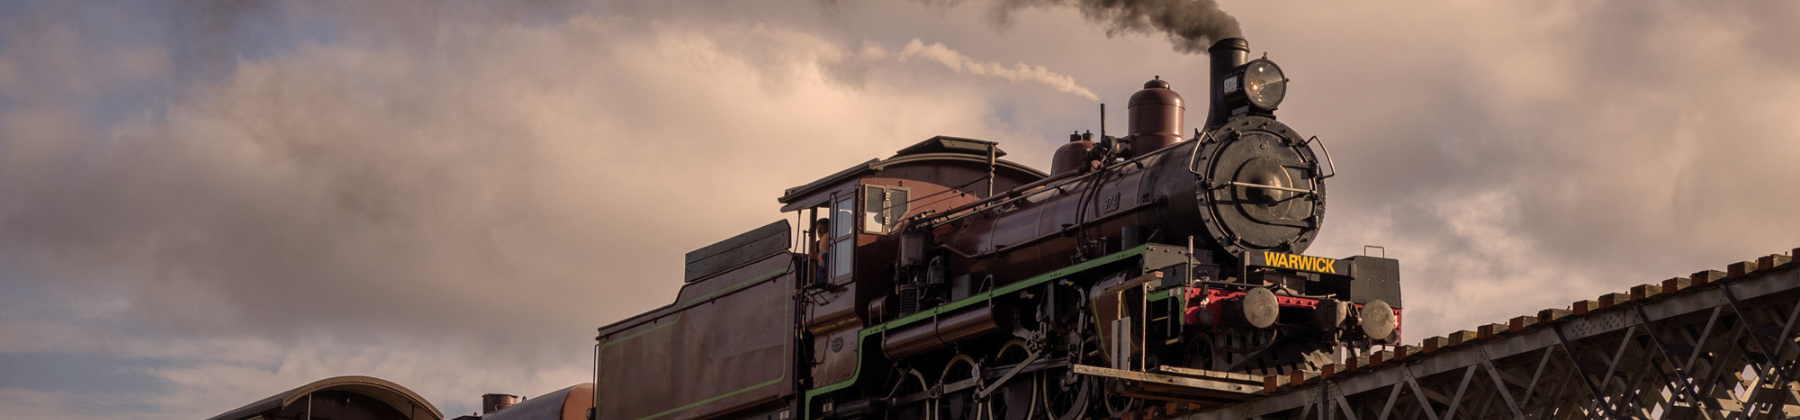 image of steam train chugging on tracks